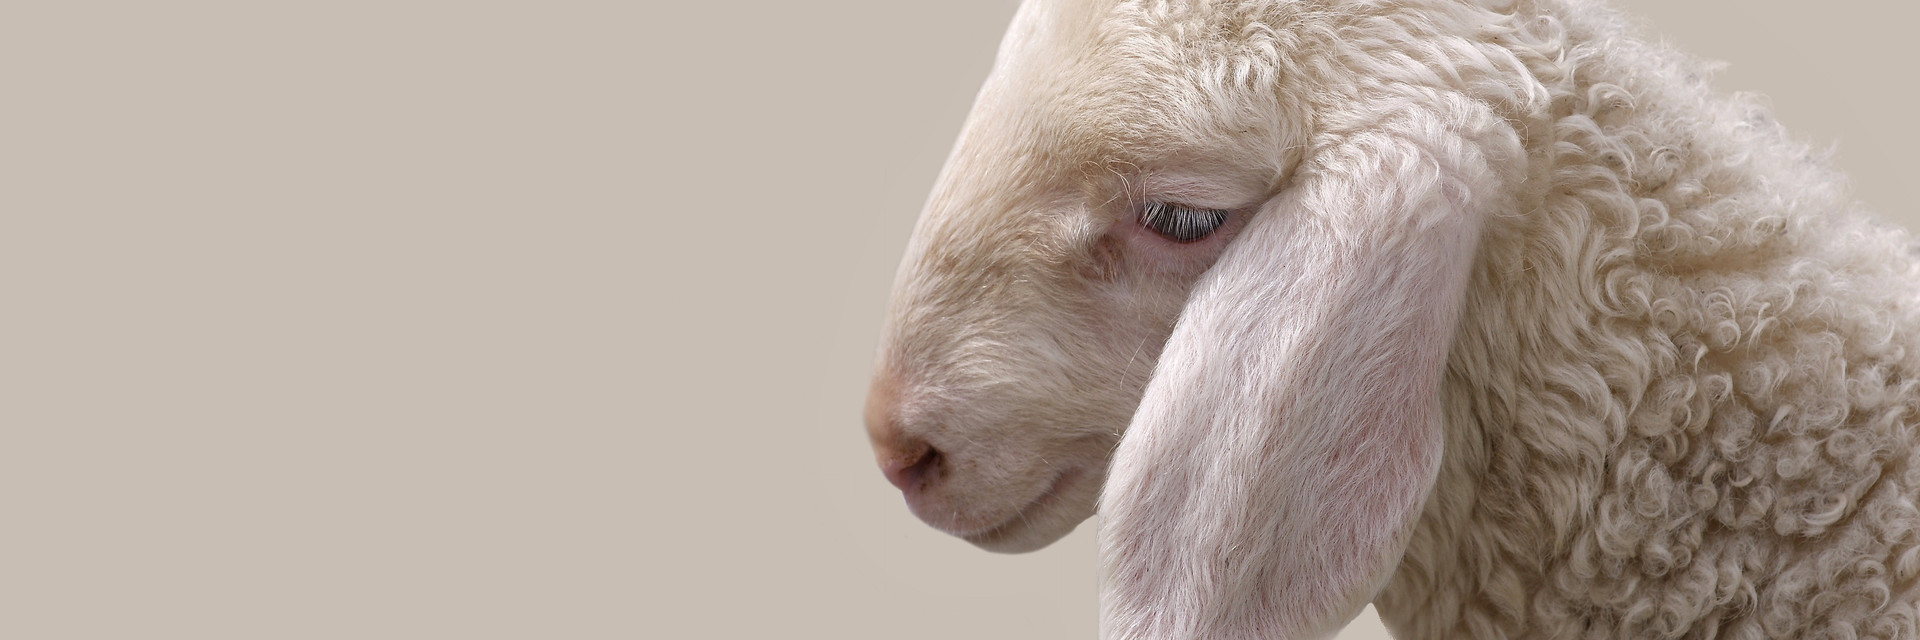 sad-looking lamb